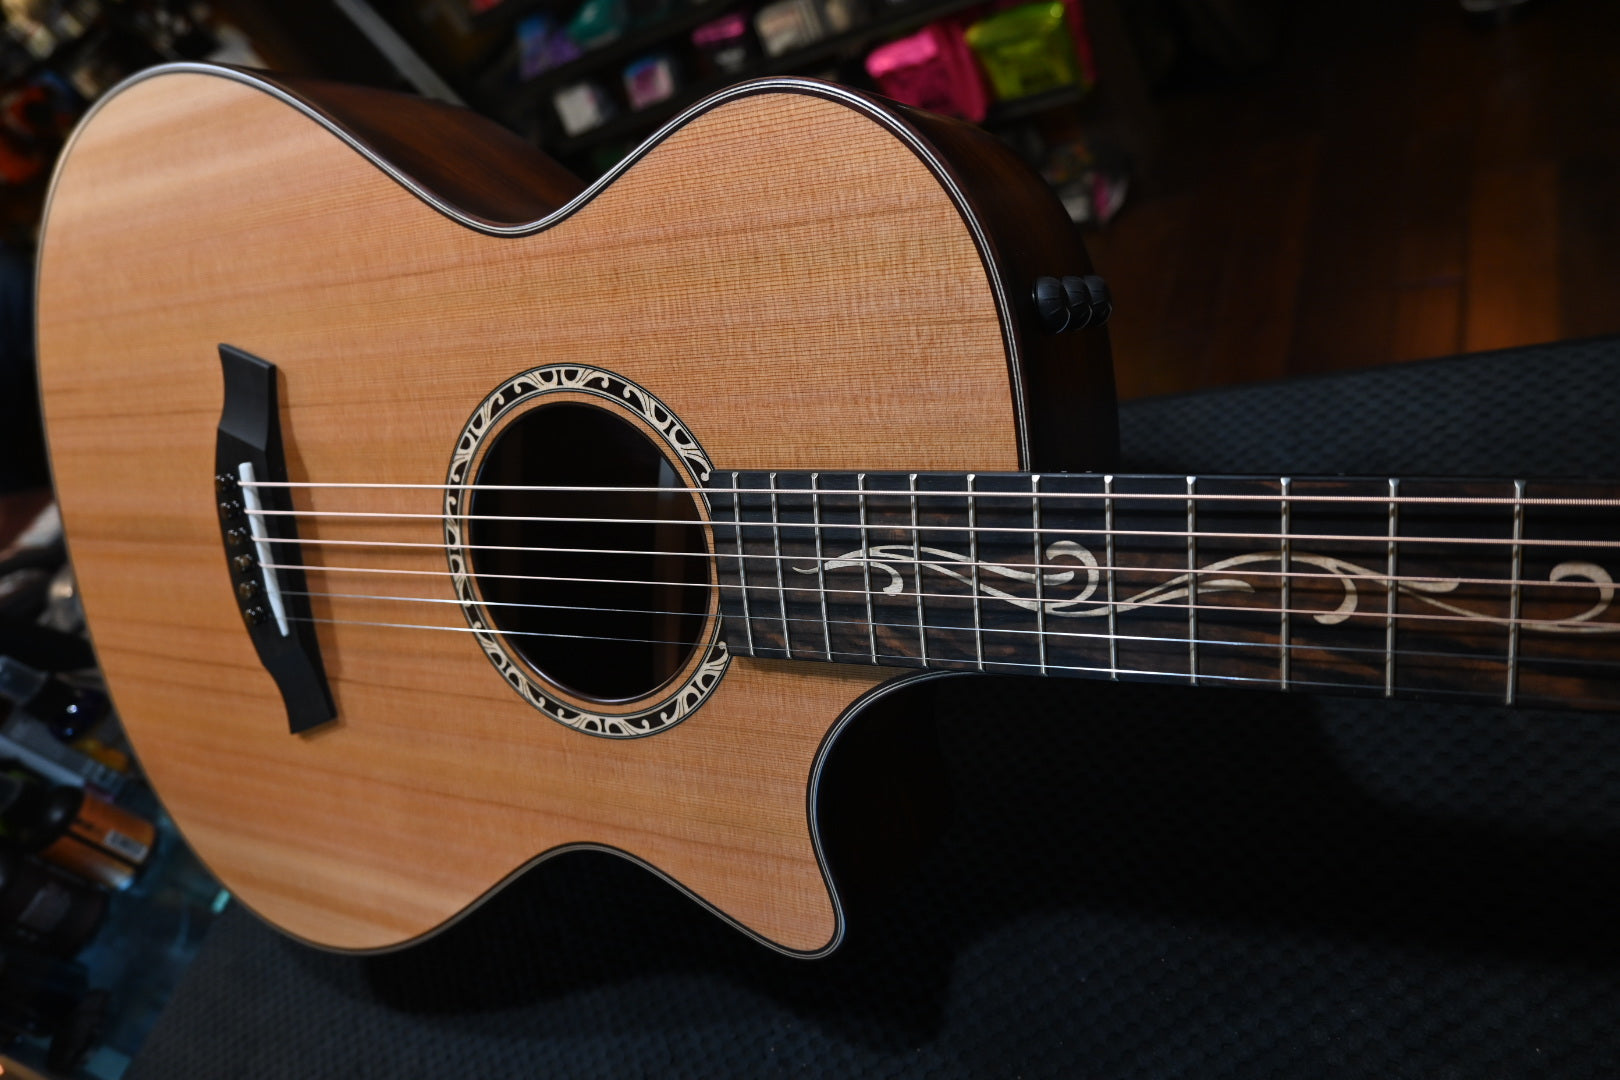 Taylor Custom GC 12-Fret Grand Concert Catch #14 Cedar/Honduran Rosewood Guitar #3104 w/ Taylor buy one get a GS Mini for $199 Promo! - Danville Music